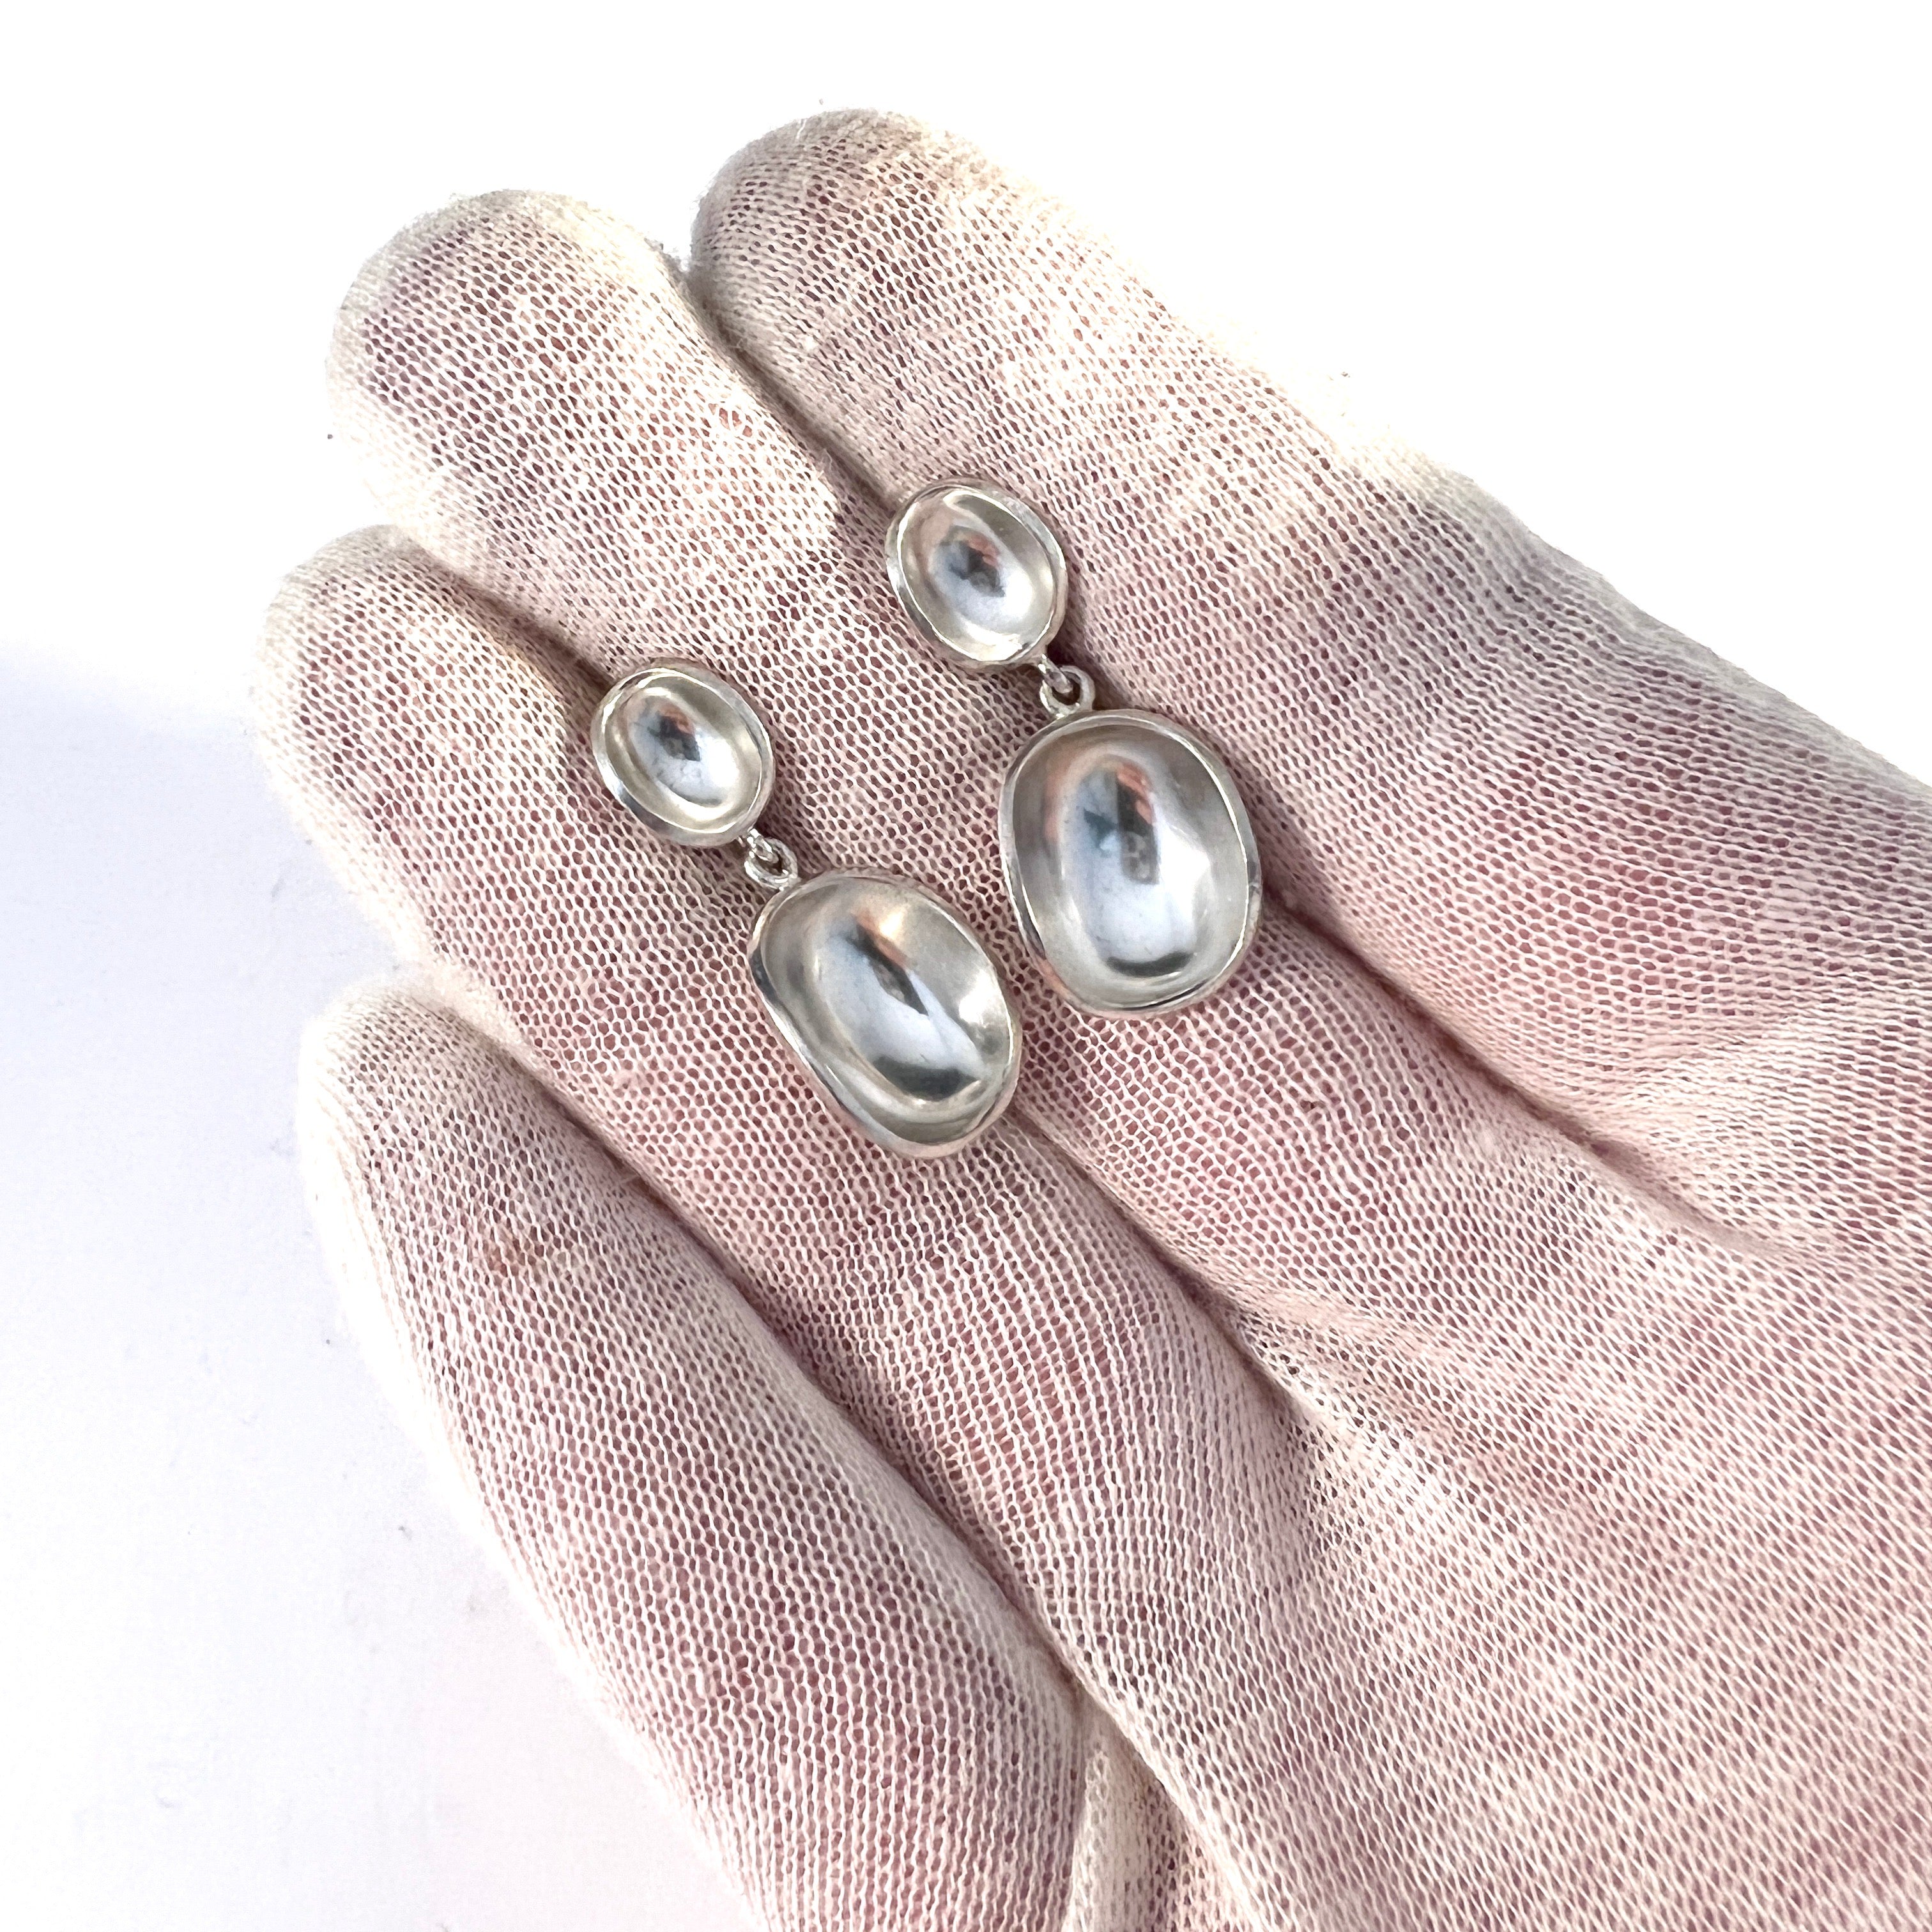 Sigurd Persson for Stigbert 1954. Vintage Sterling Silver Earrings. Design "Bowl"